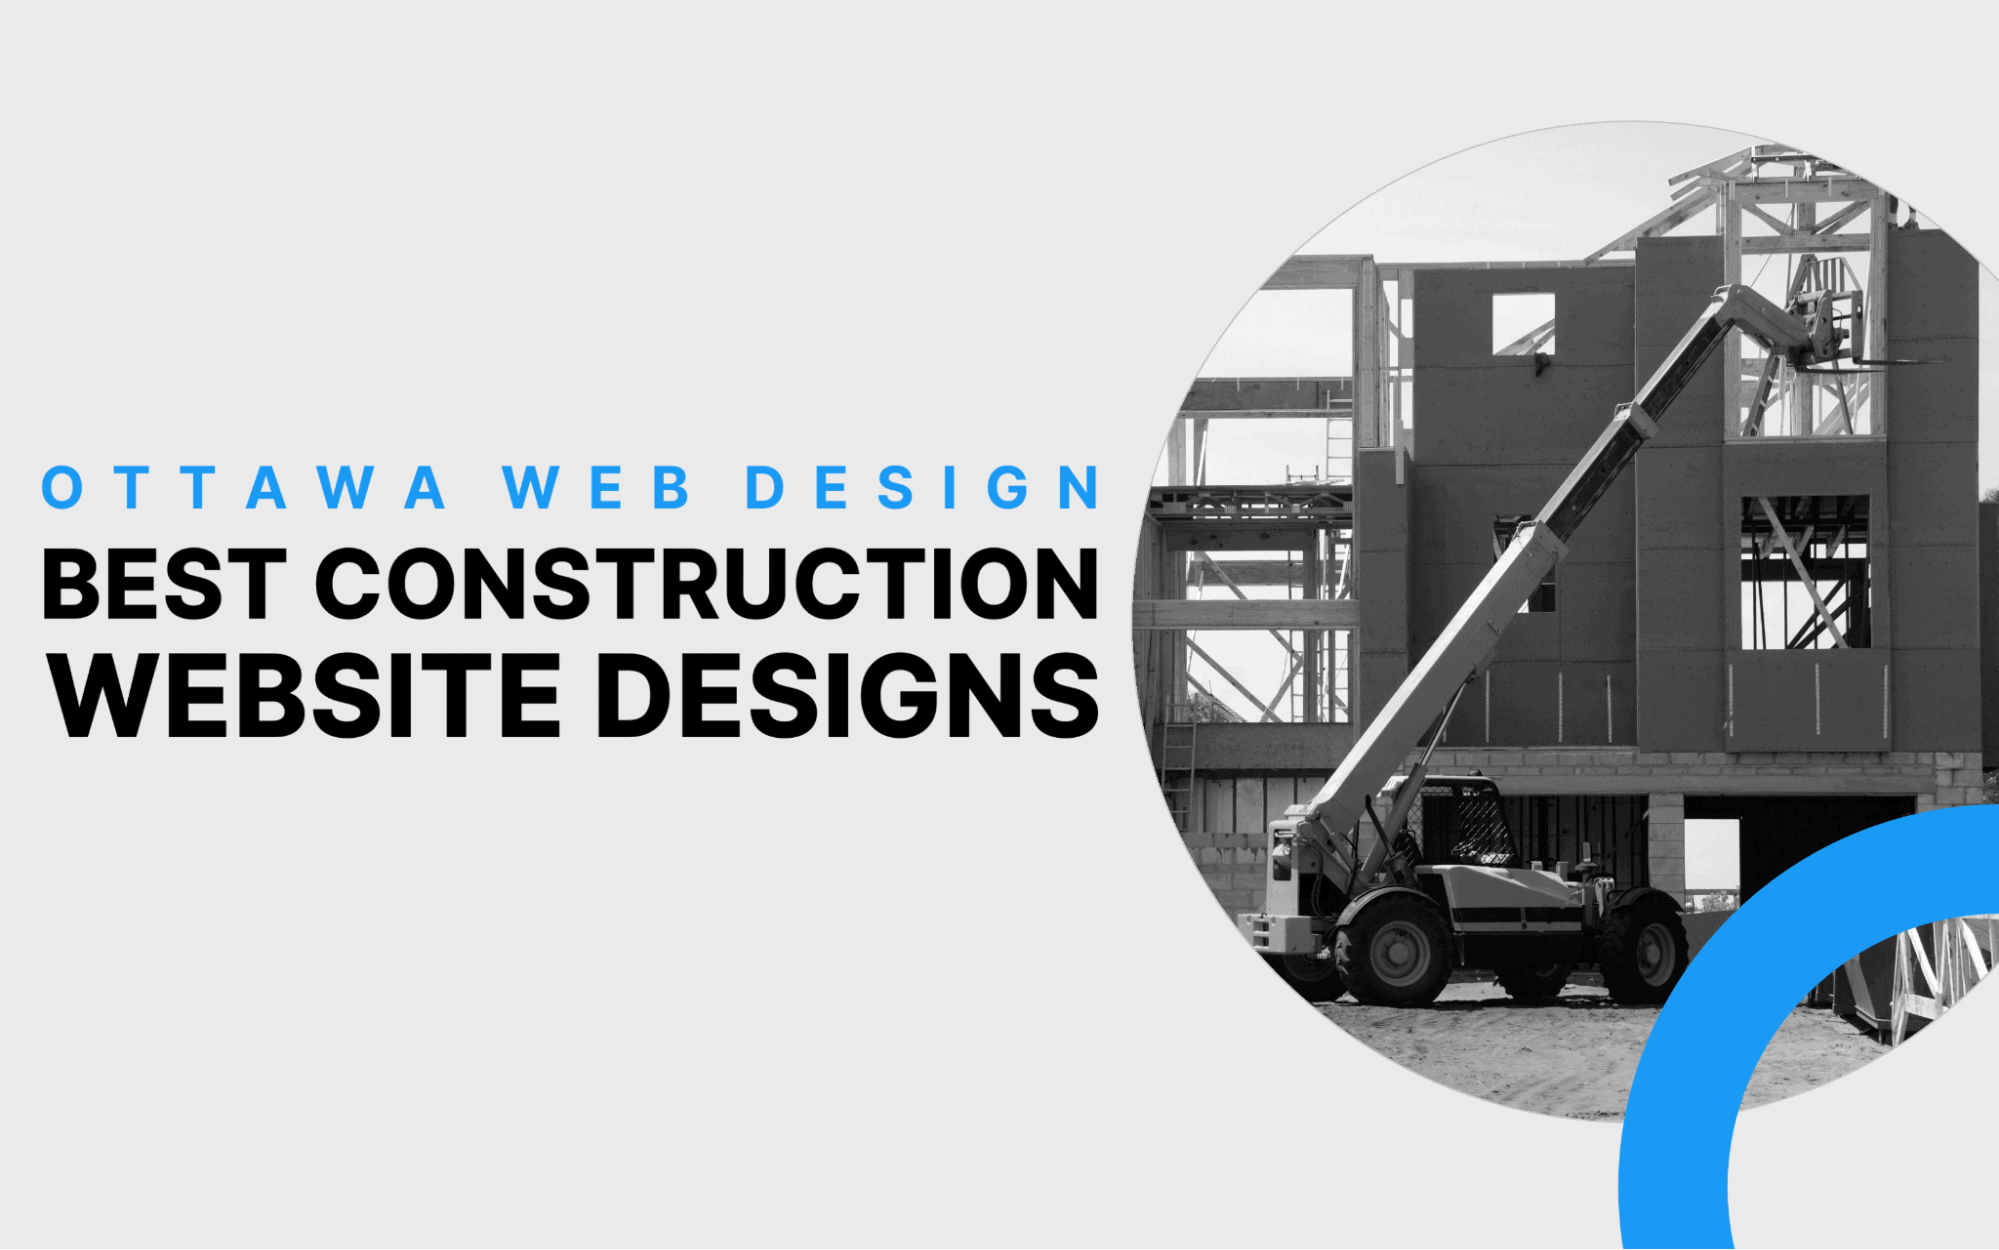 The 7 Best Construction Website Designs